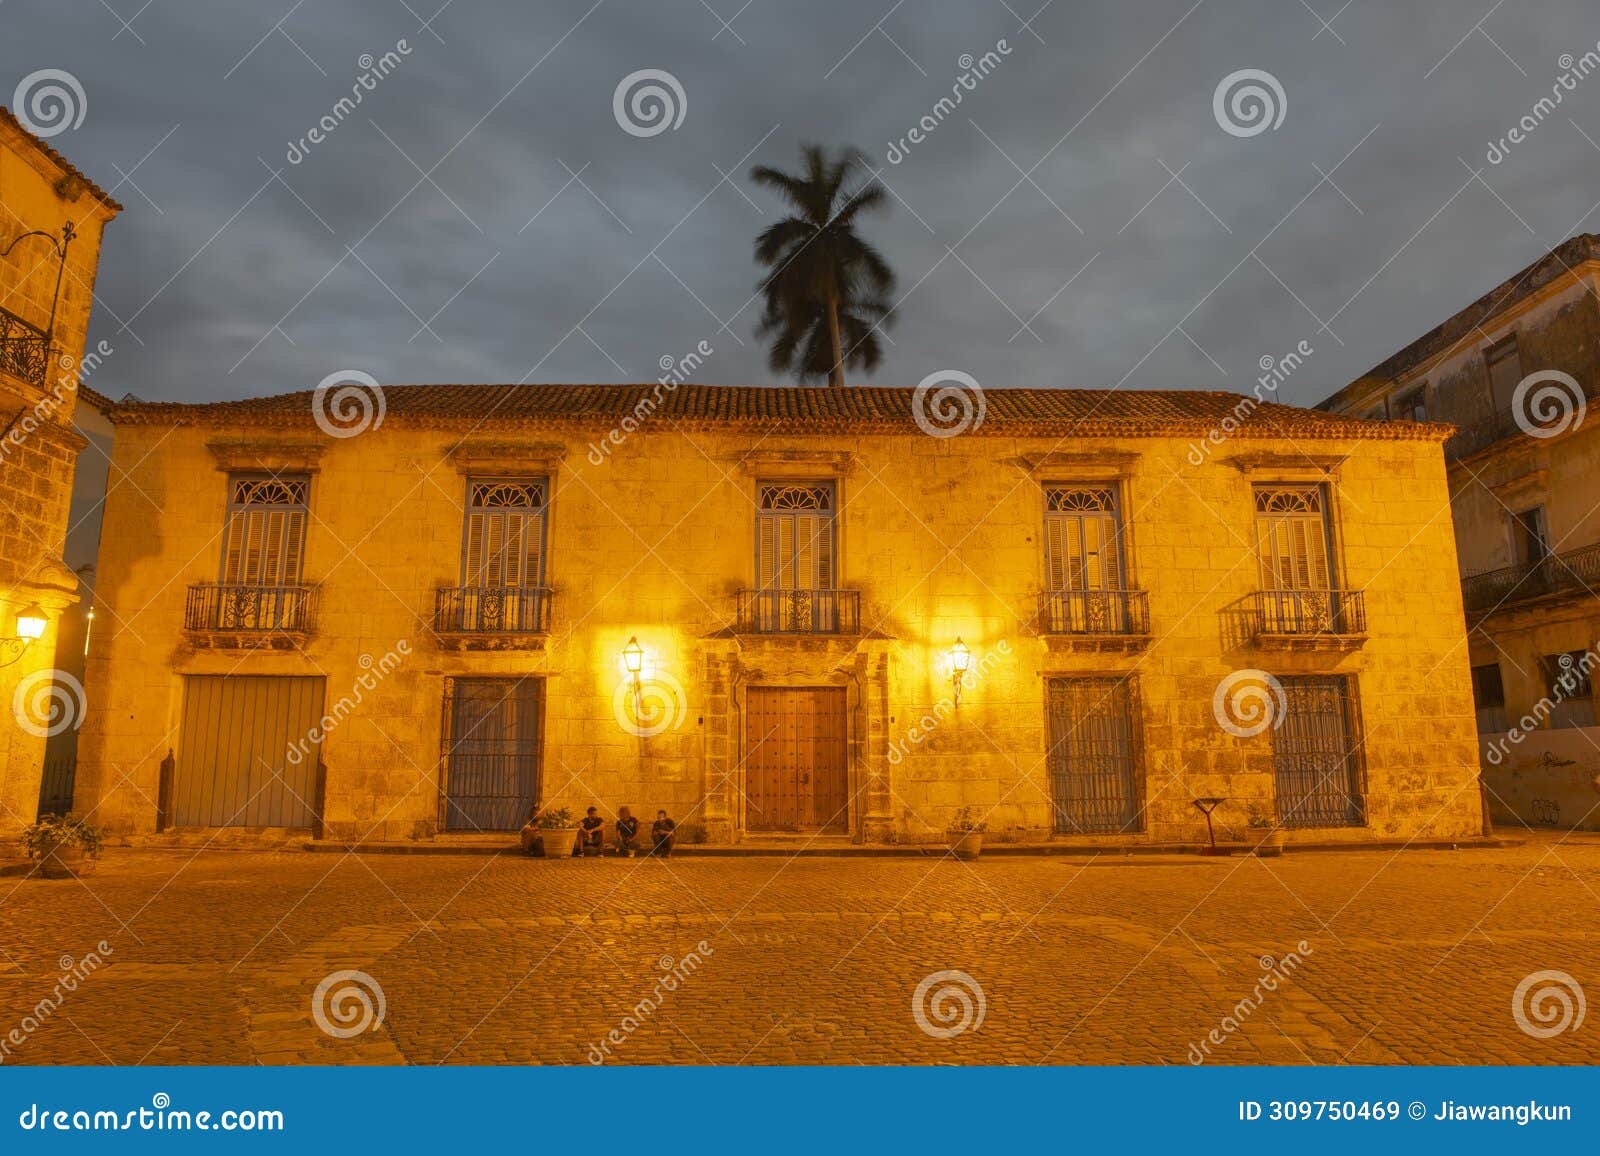 colonial art museum, old havana, cuba